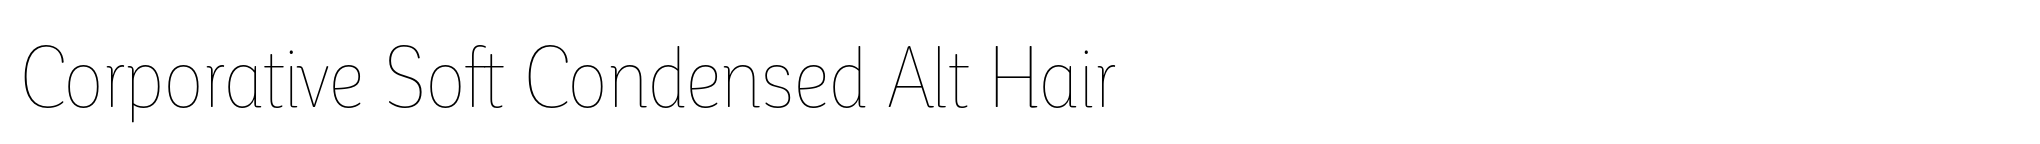 Corporative Soft Condensed Alt Hair image